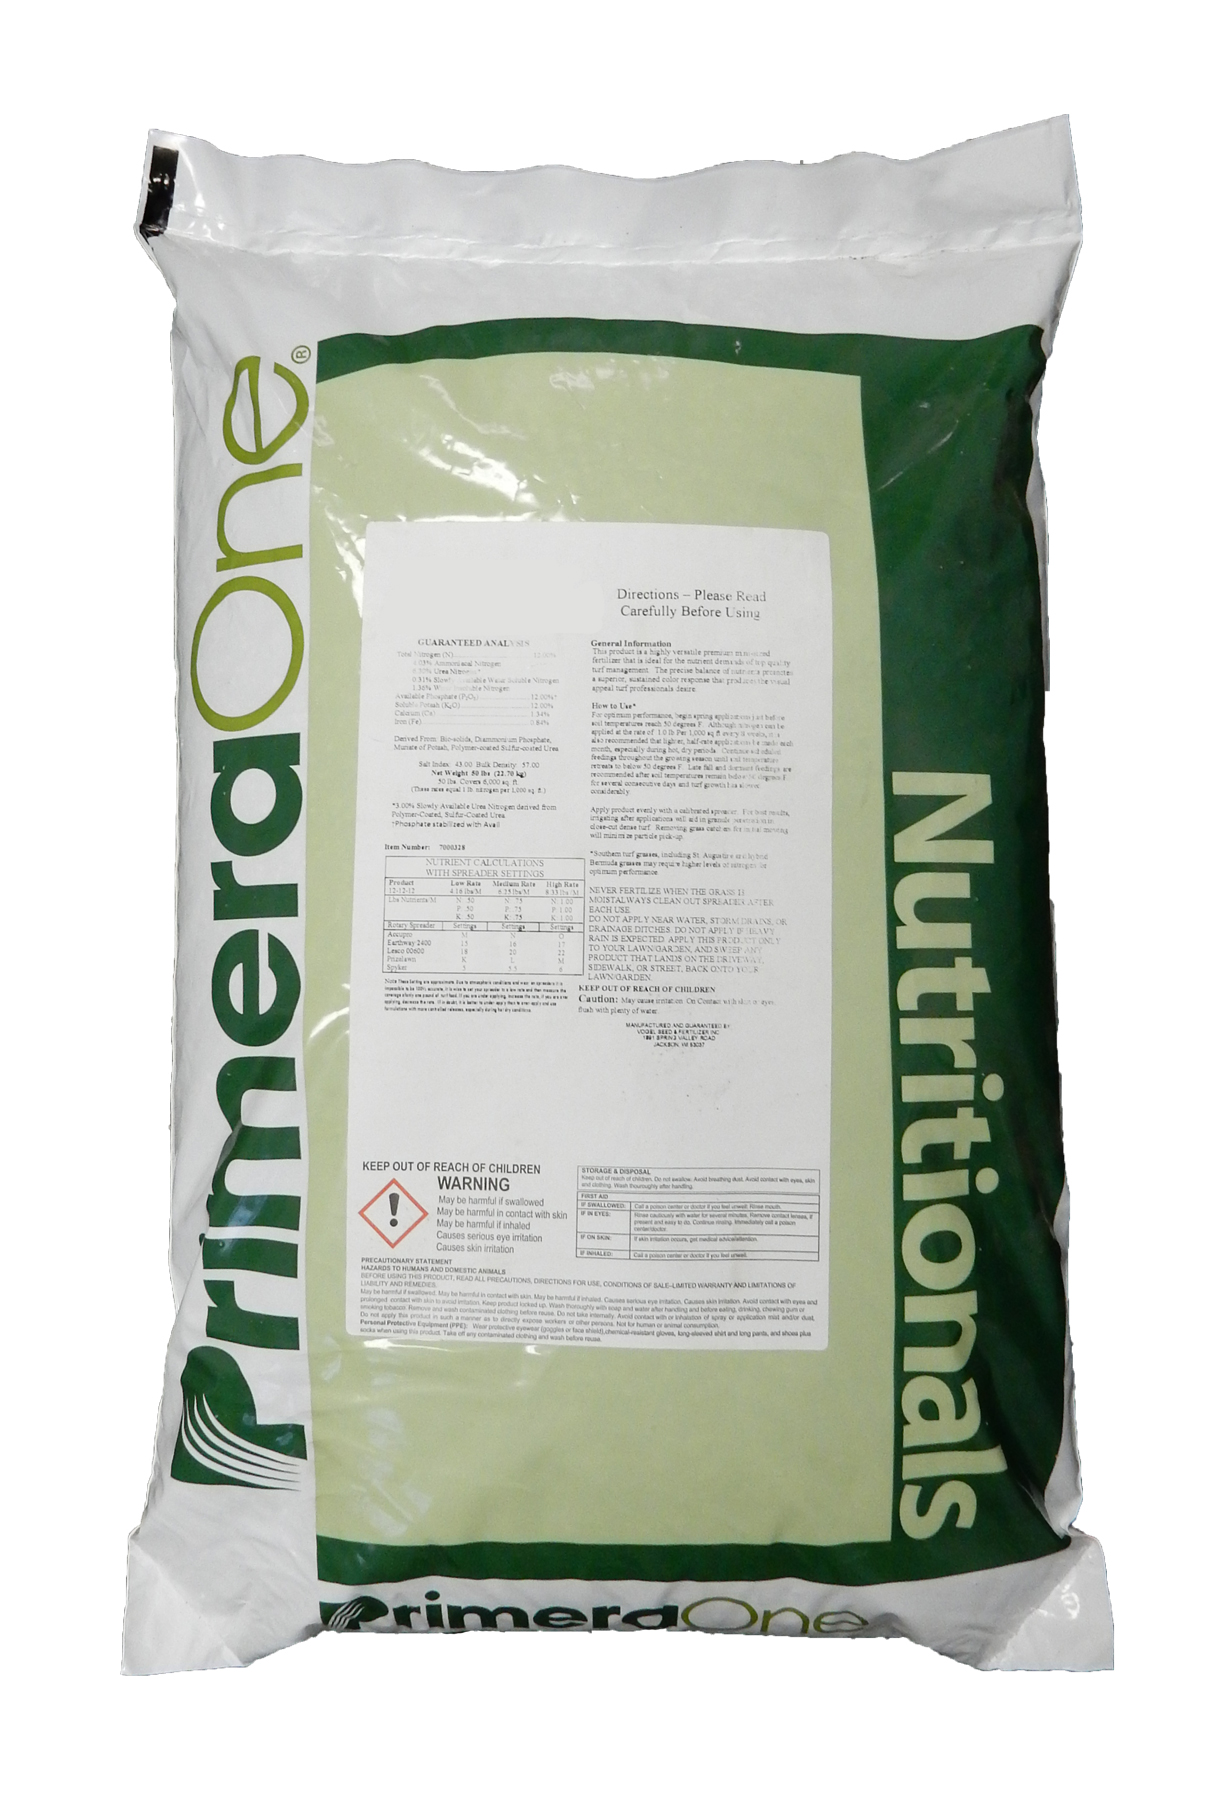 PrimeraOne 20-10-20 Greenhouse 25 lb Bag - 80 per pallet - Water Soluble Fertilizer